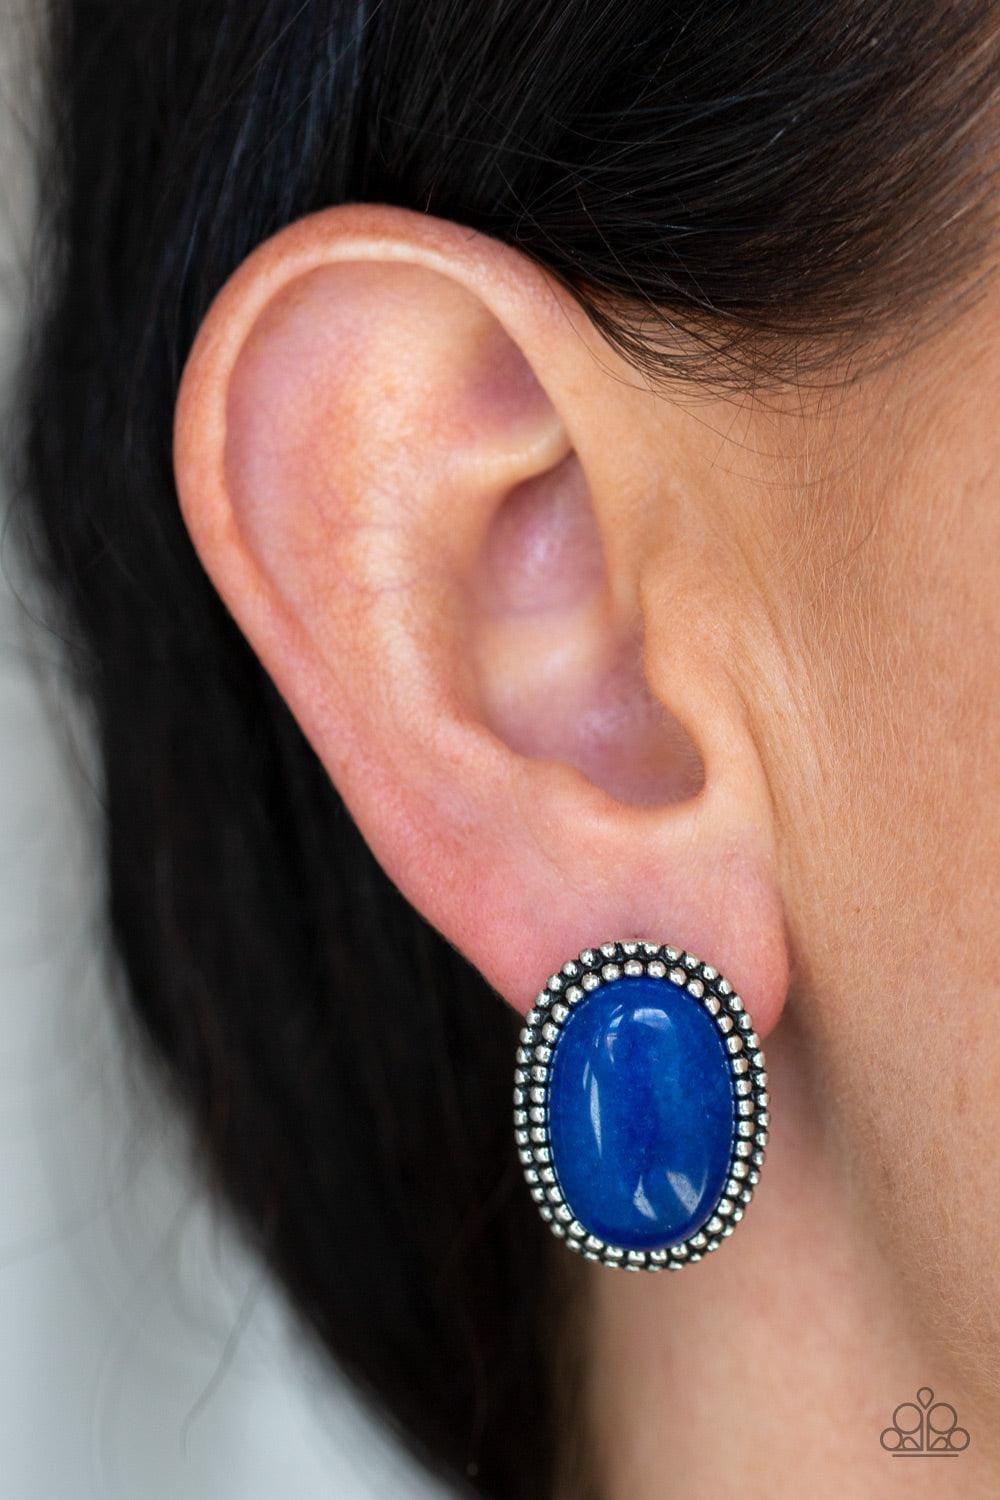 Paparazzi Accessories - Shiny Sediment - Blue Earrings - Bling by JessieK